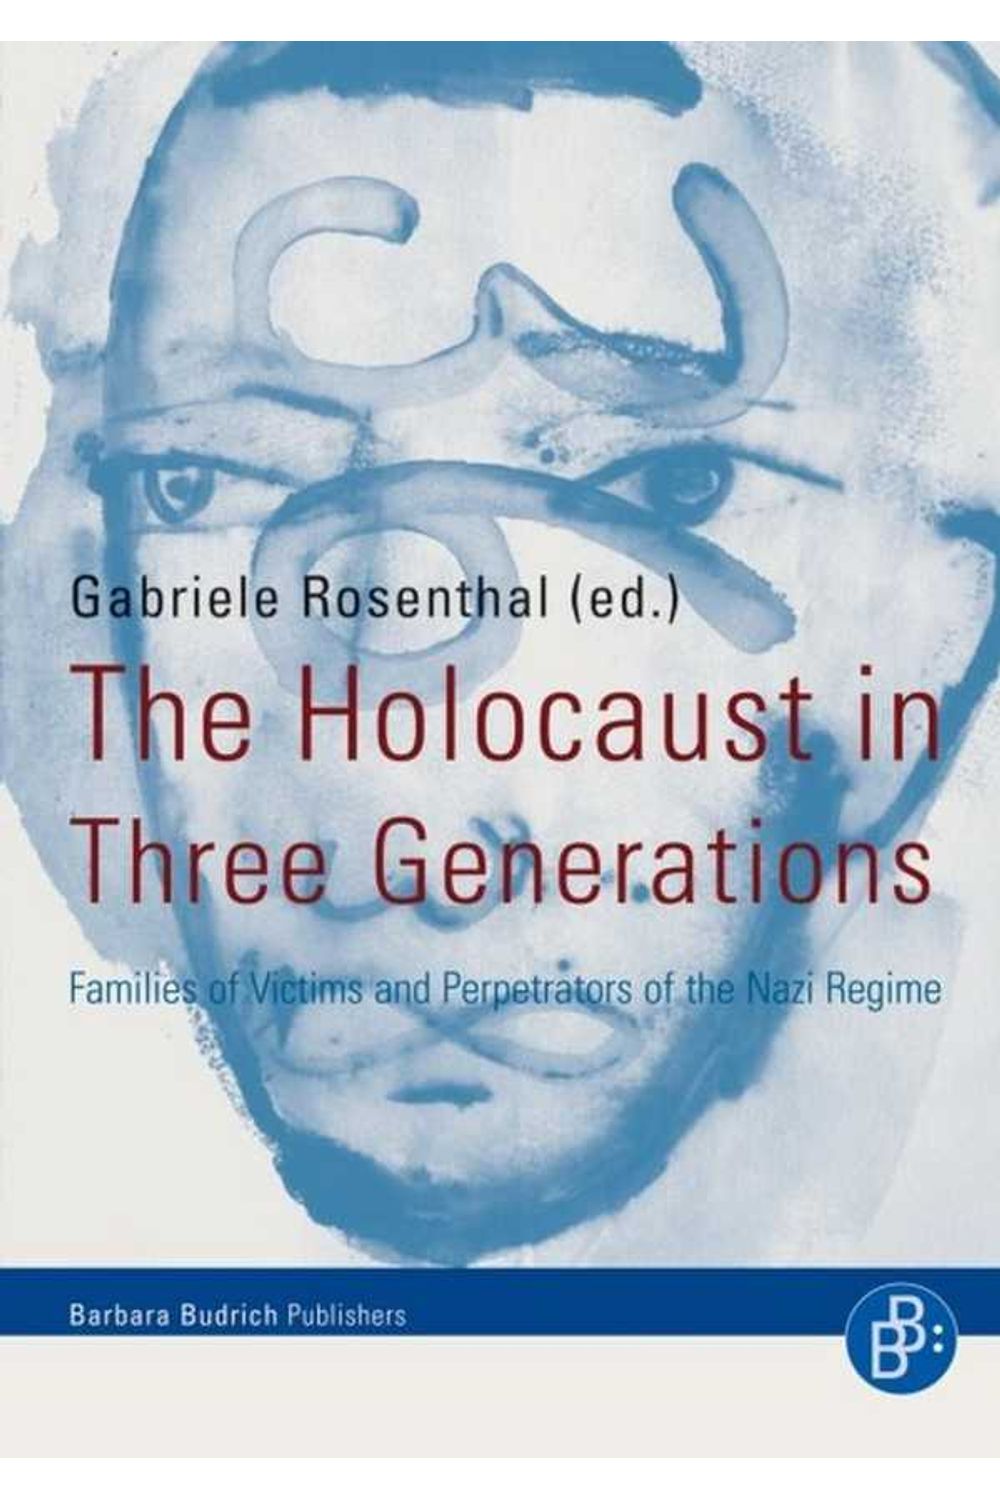 bw-the-holocaust-in-three-generations-verlag-barbara-budrich-9783866497405